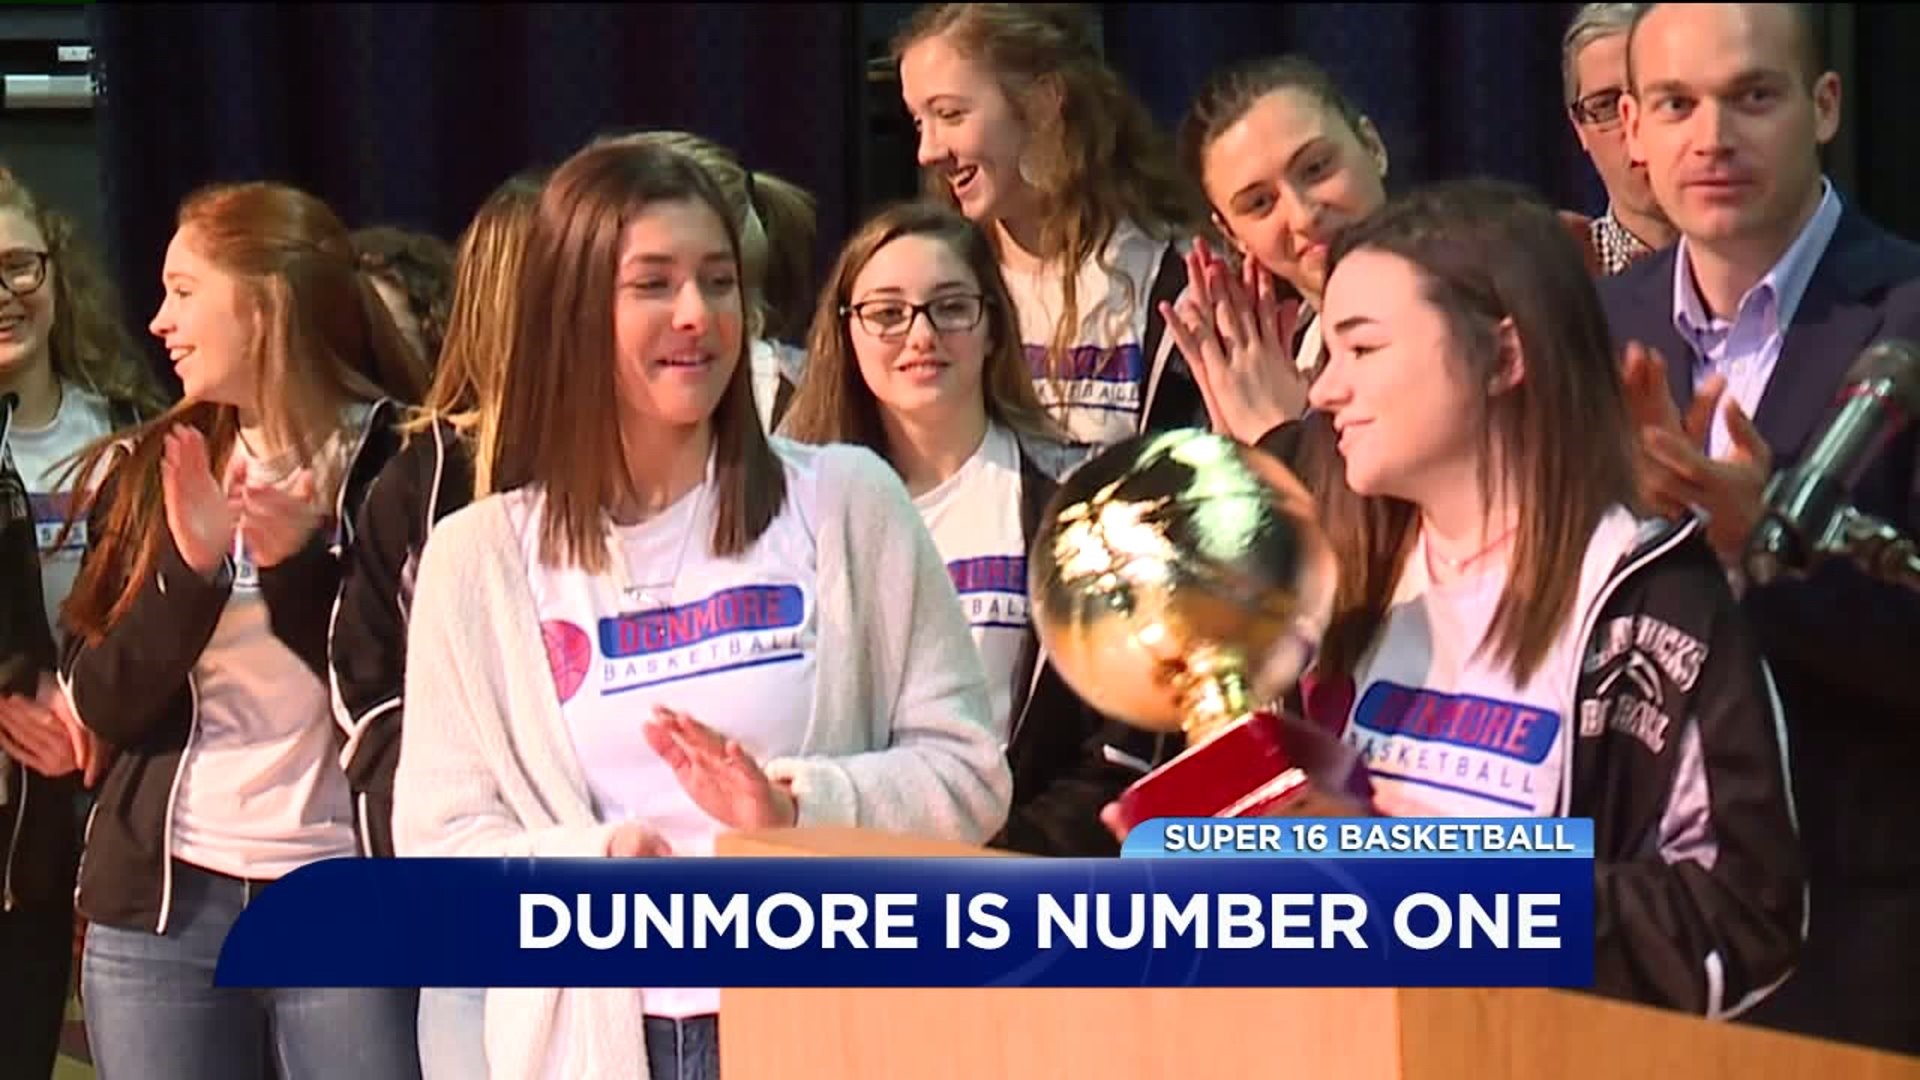 Dunmore Girls Basketball Team Top Our Super 16